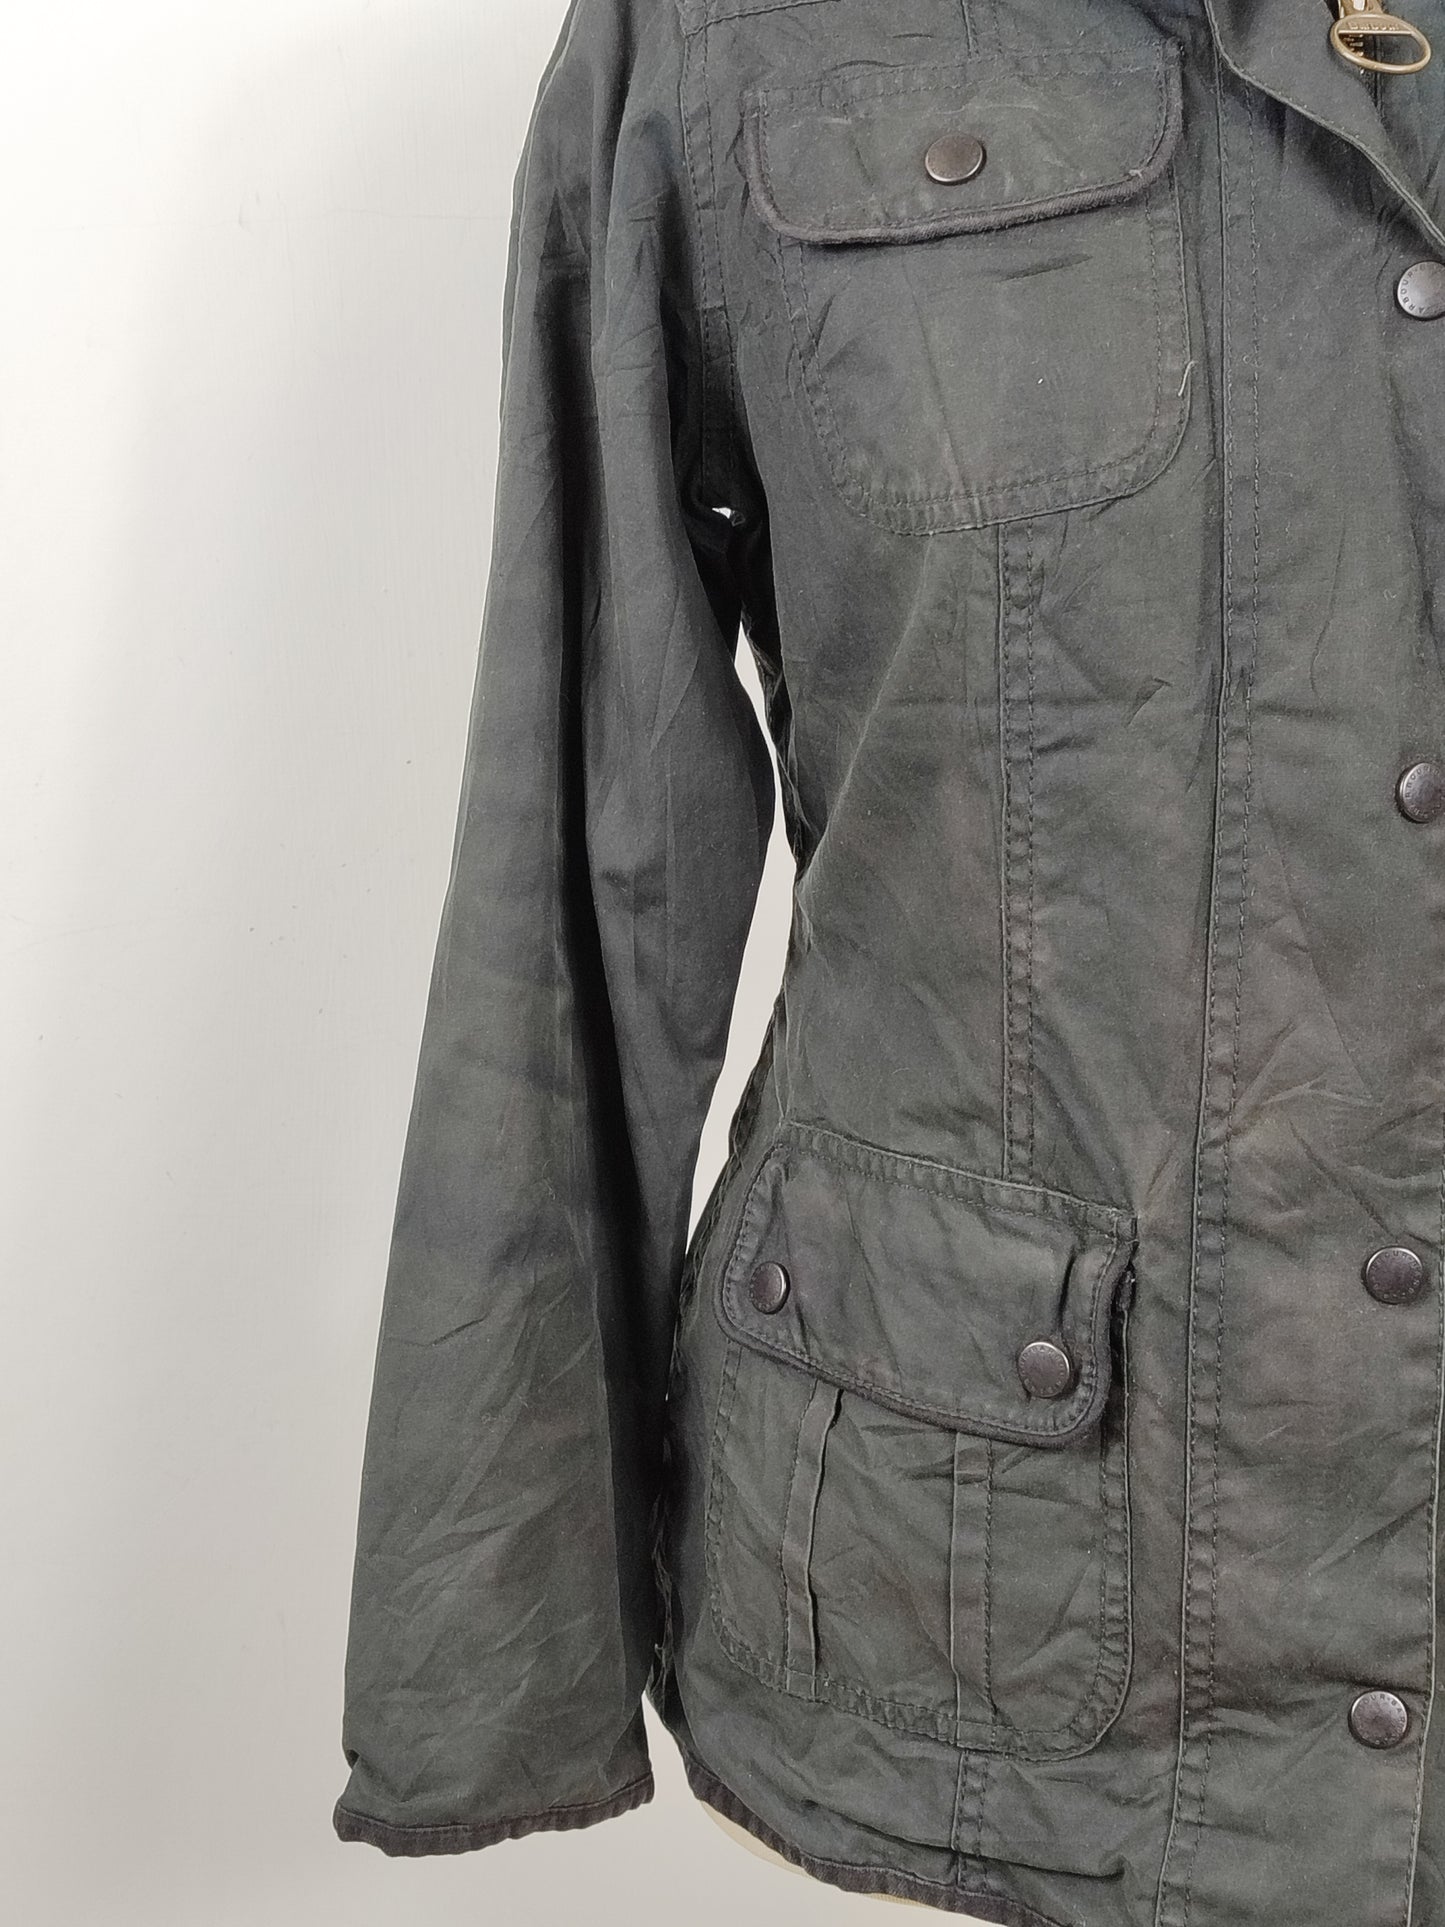 Giacca Barbour corta donna nera UK8 Xsmall Black short Lady Utility jacket XS tg.38